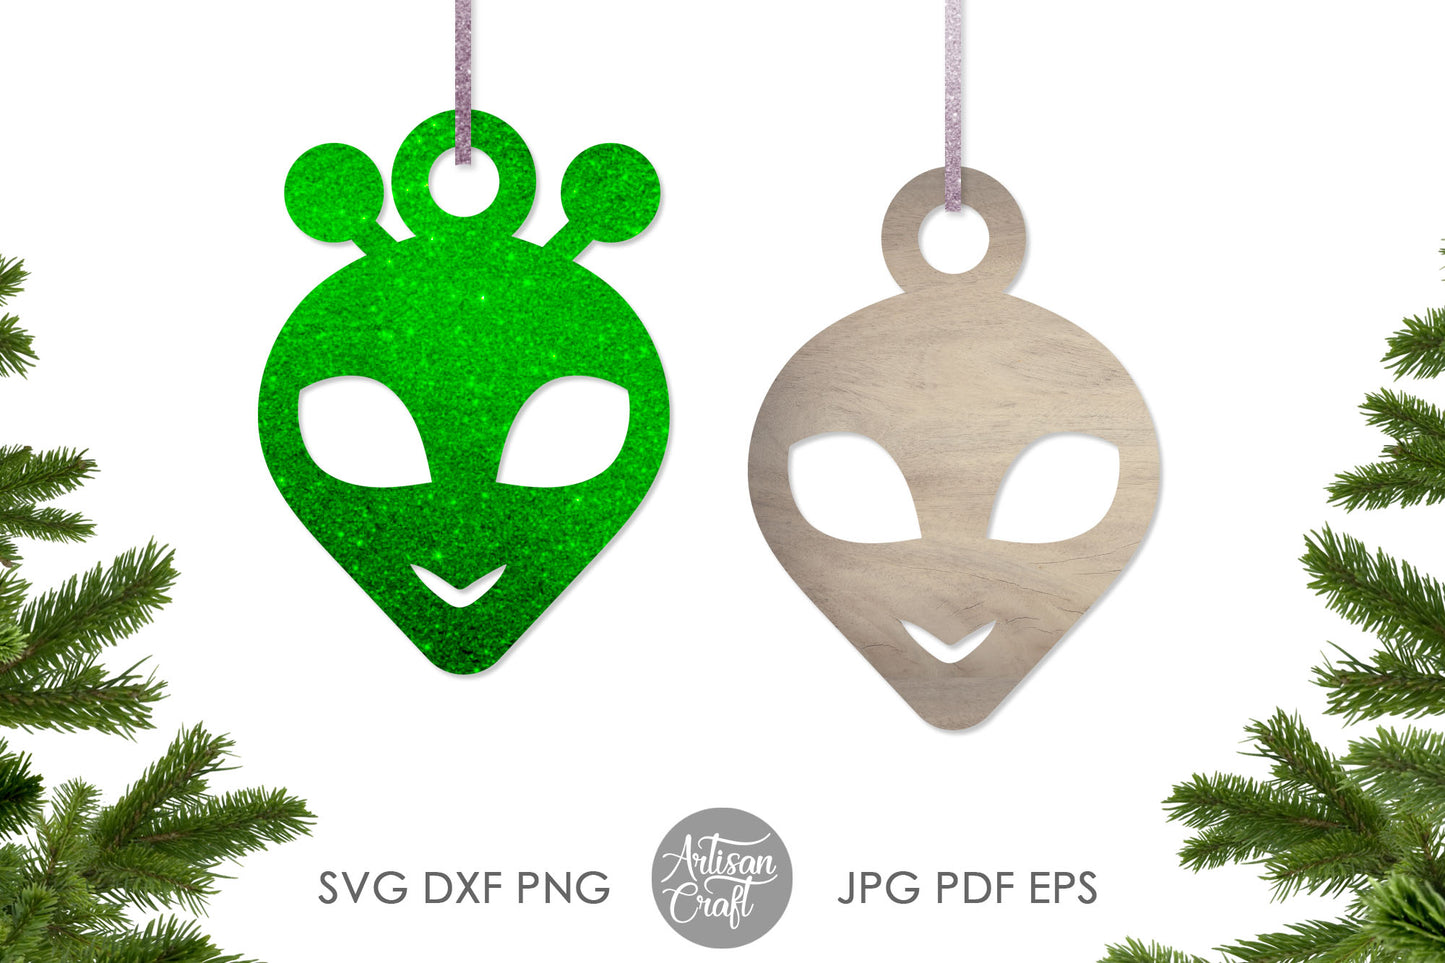 Alien ornament SVG cut file